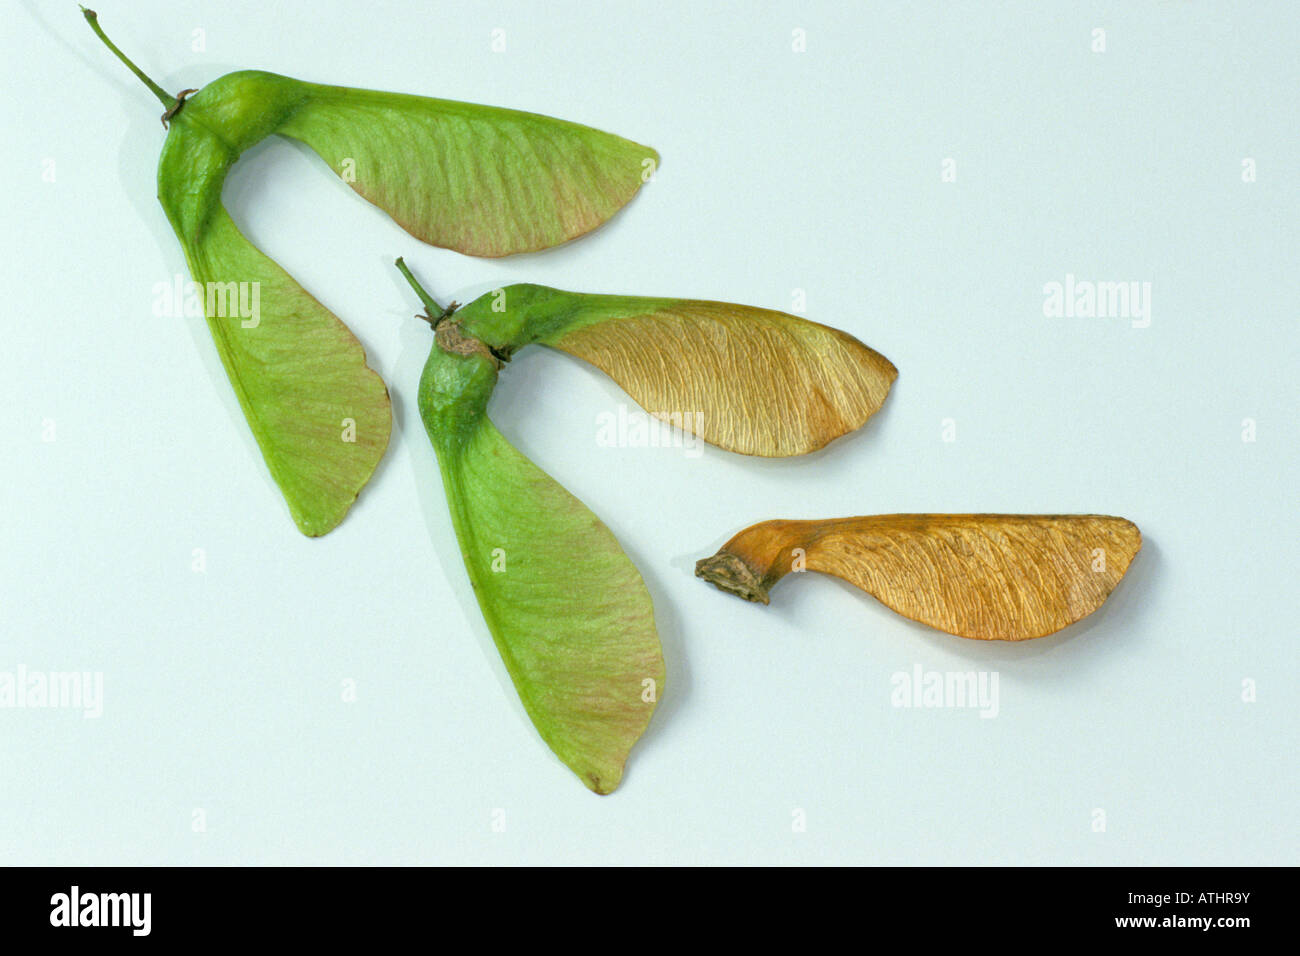 Ahorn (Acer Pseudoplatanus), Samen Studio Bild Stockfoto